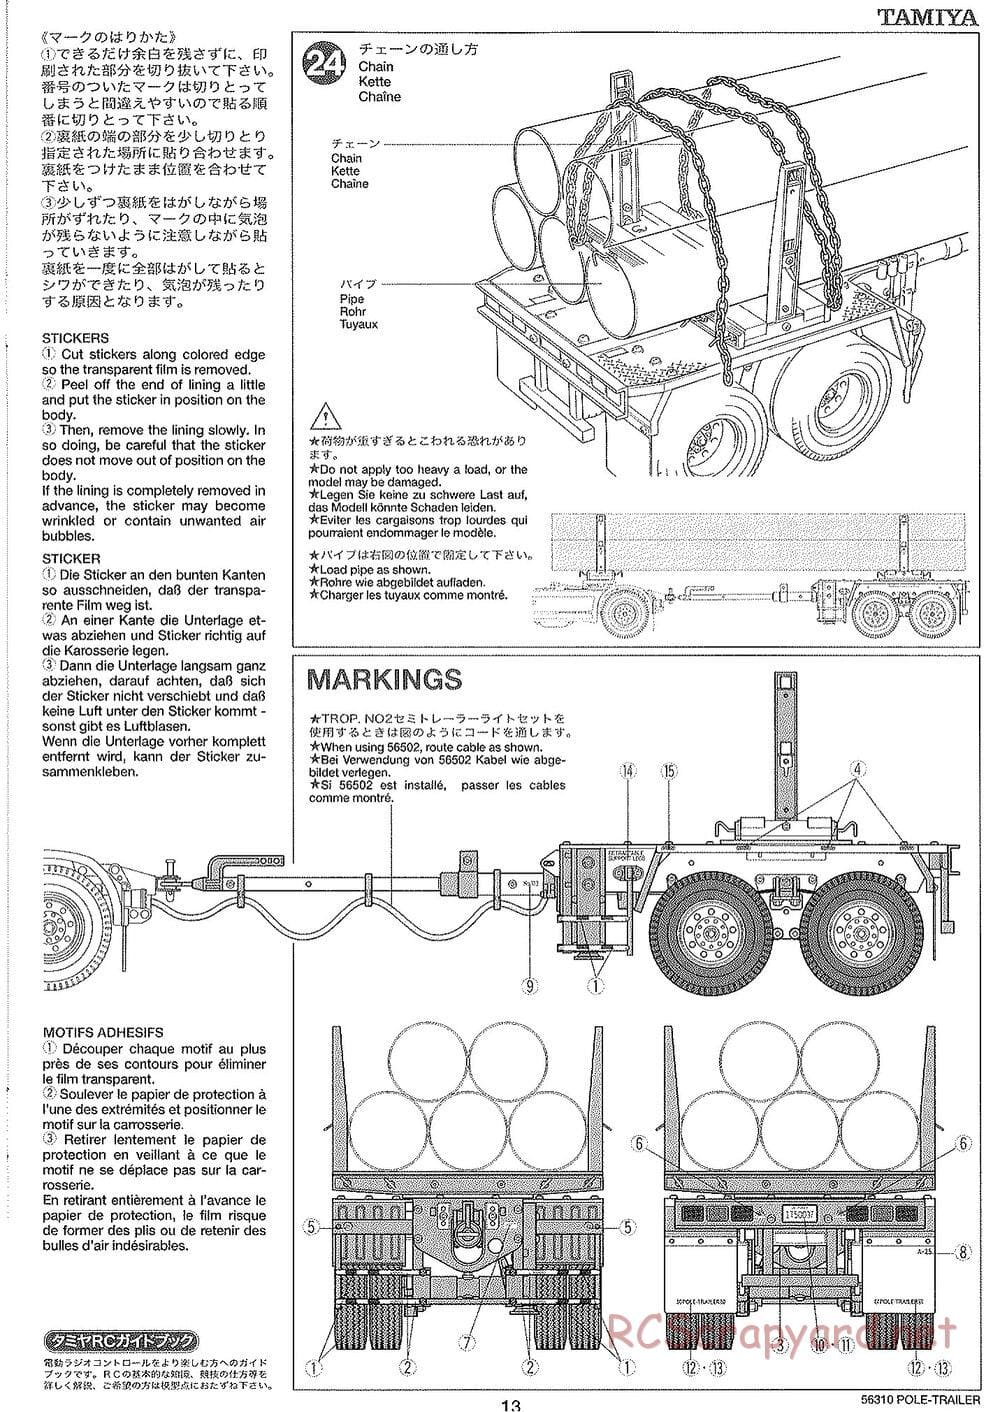 Tamiya - Semi Pole Trailer Chassis - Manual - Page 13